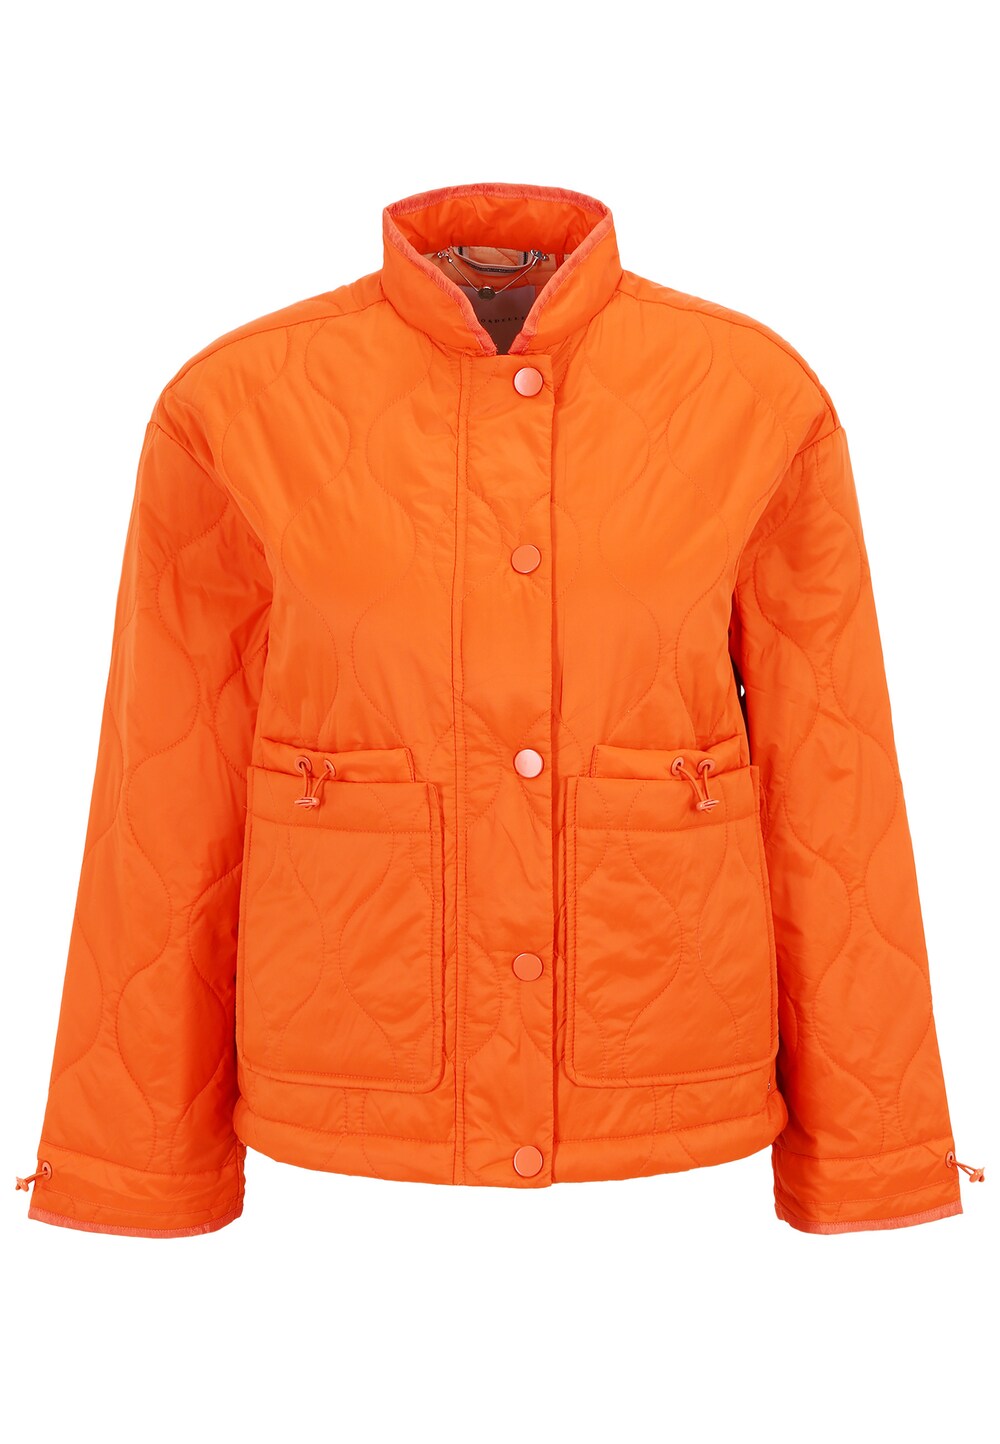 Межсезонная куртка Rino & Pelle Buena, апельсин